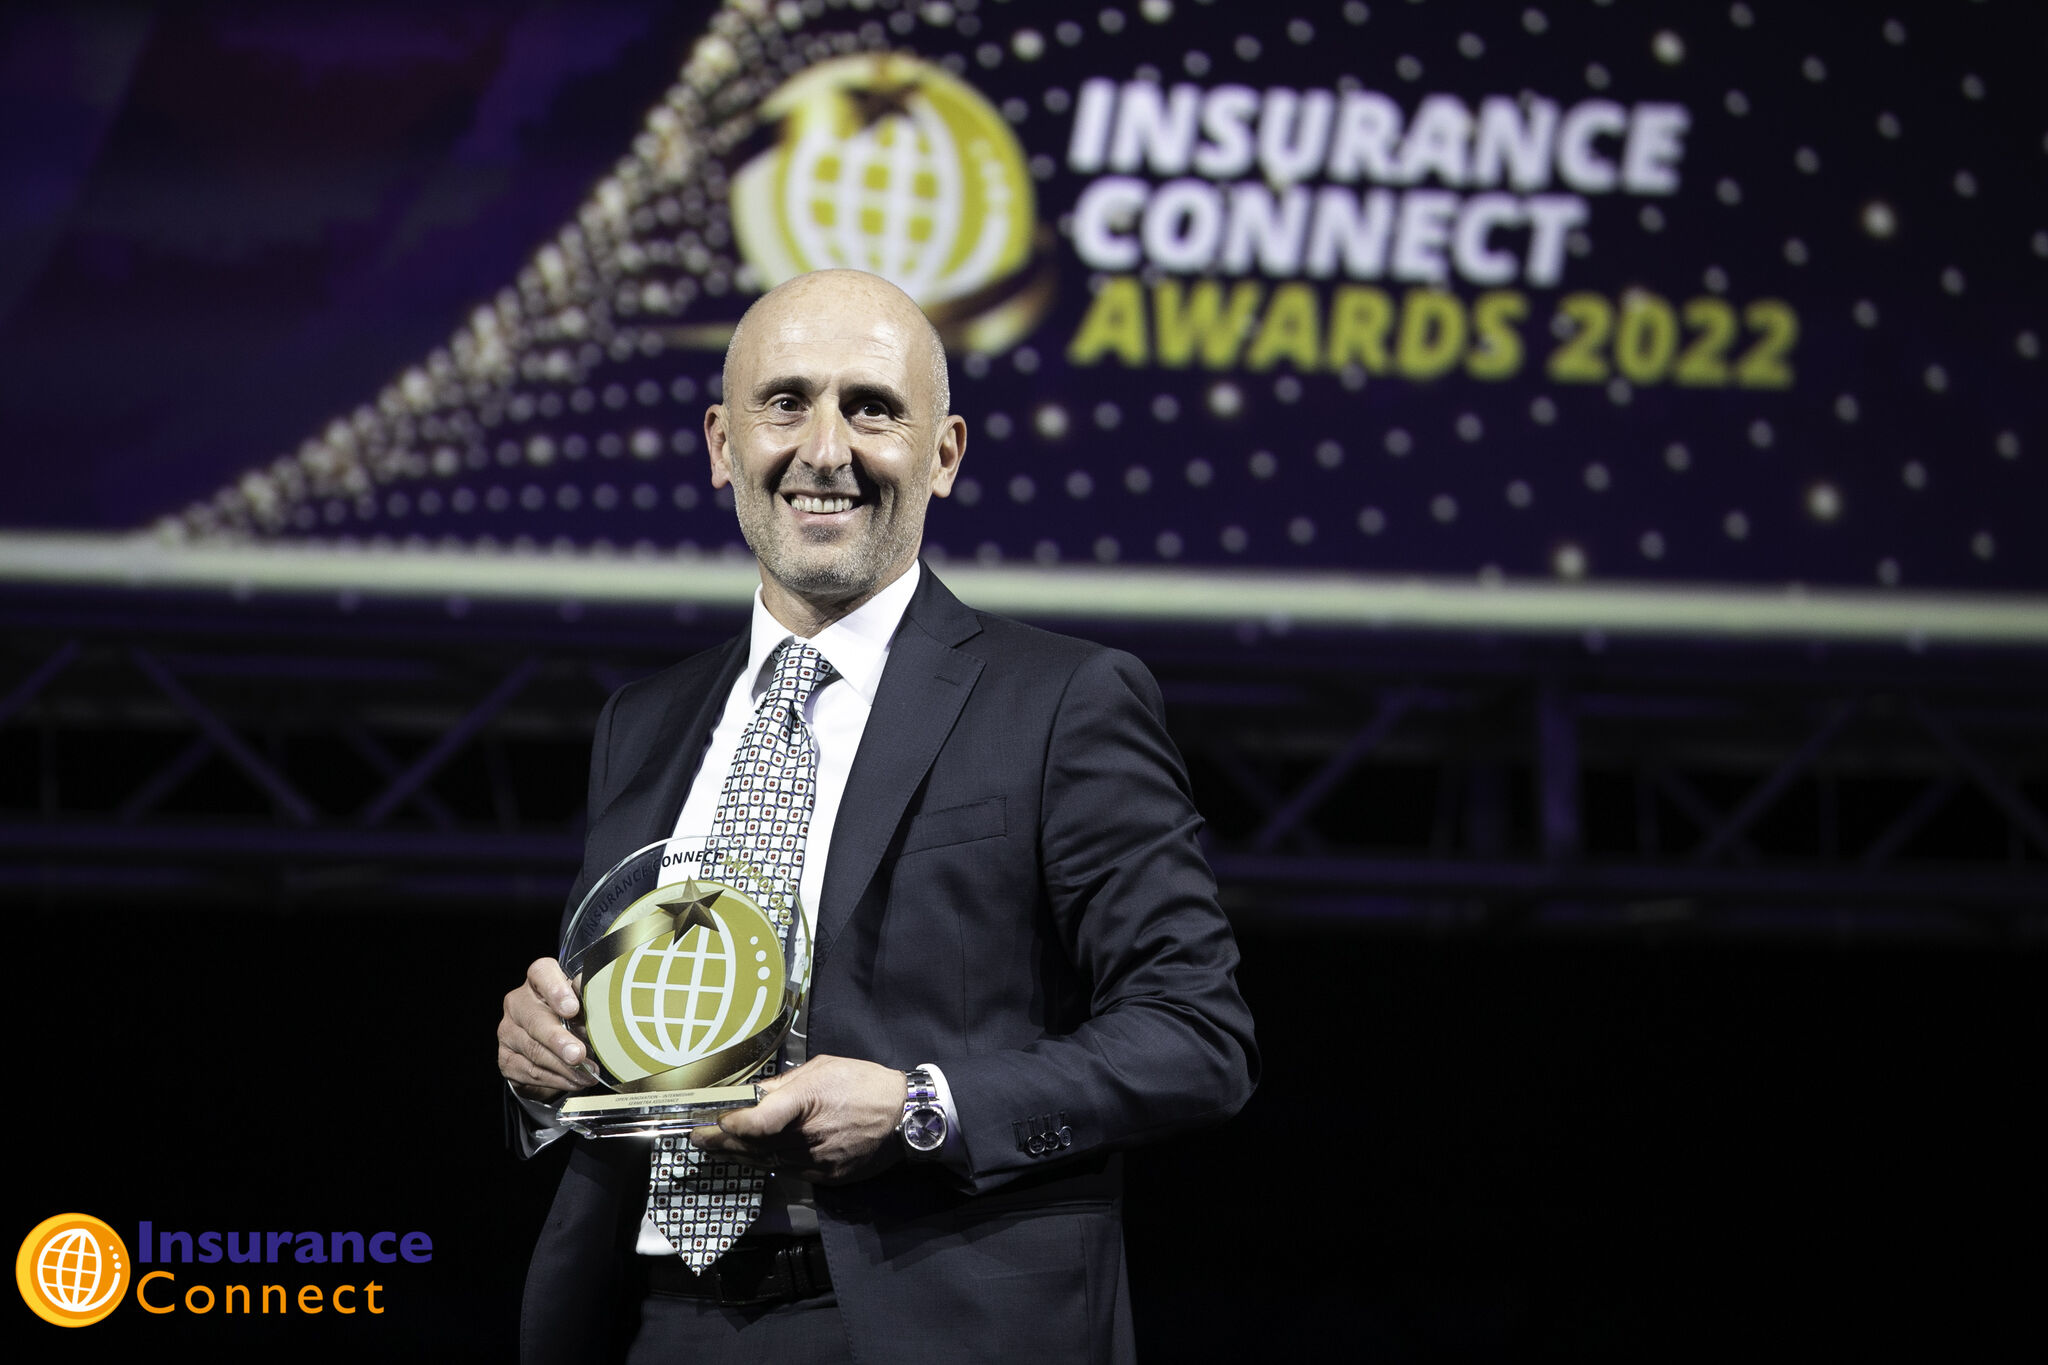 AD Sermetra Assistance Denis Girola Durante l'Evento Insurance Connect Award 2022